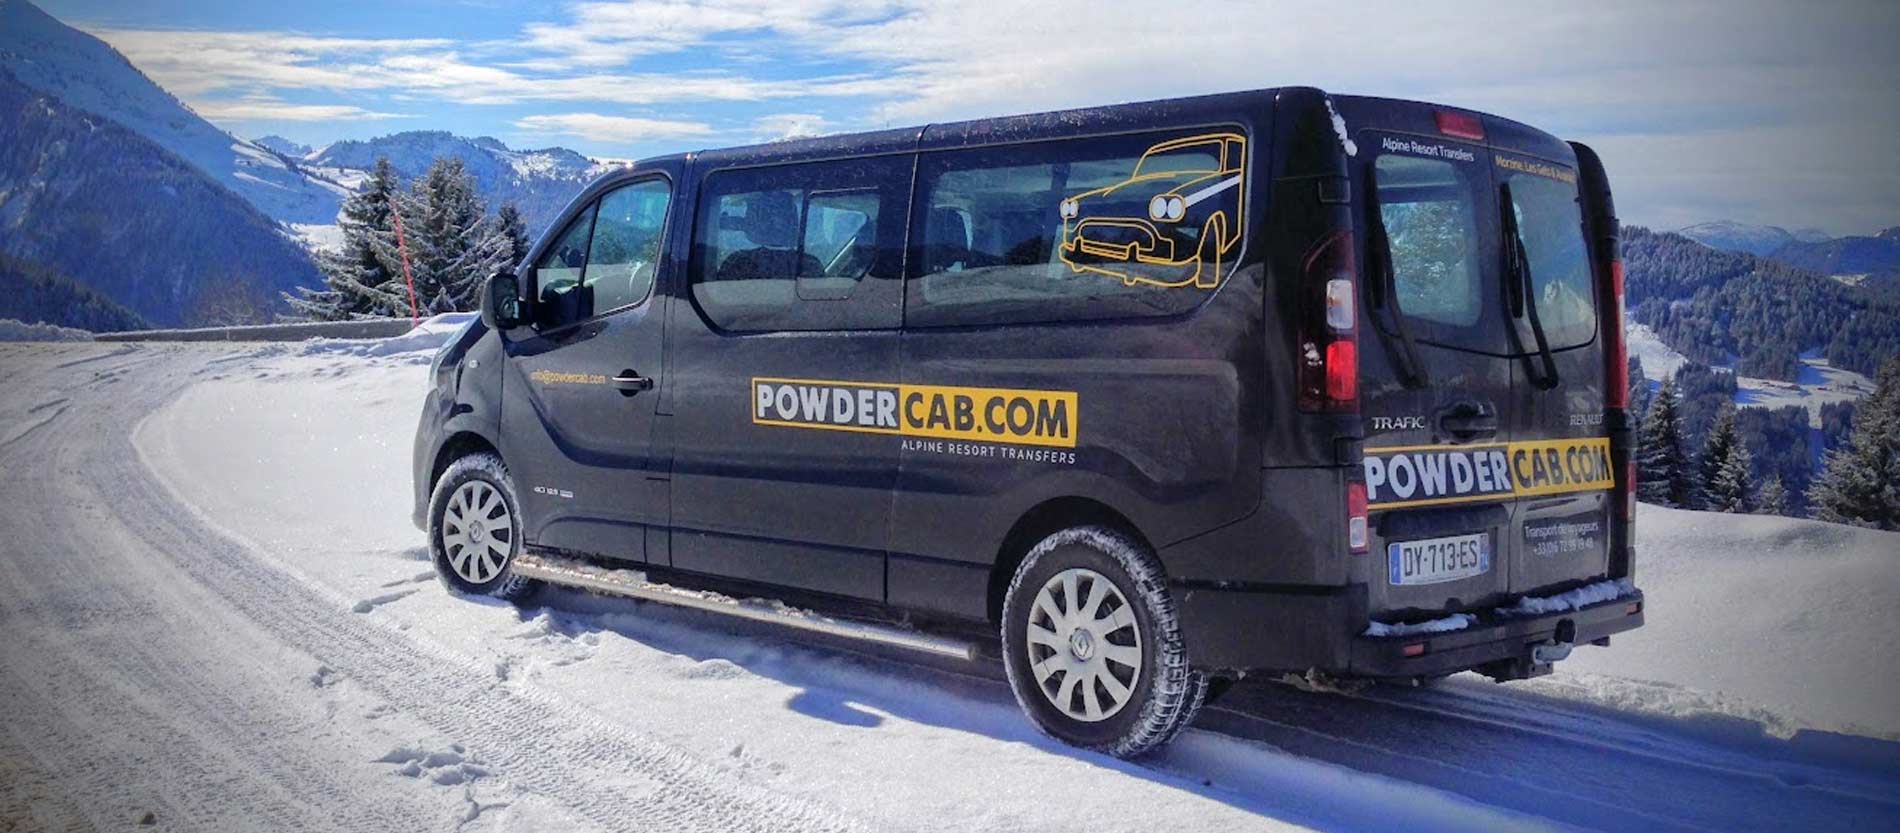 Geneva Morzine Transfers minibus in the snow